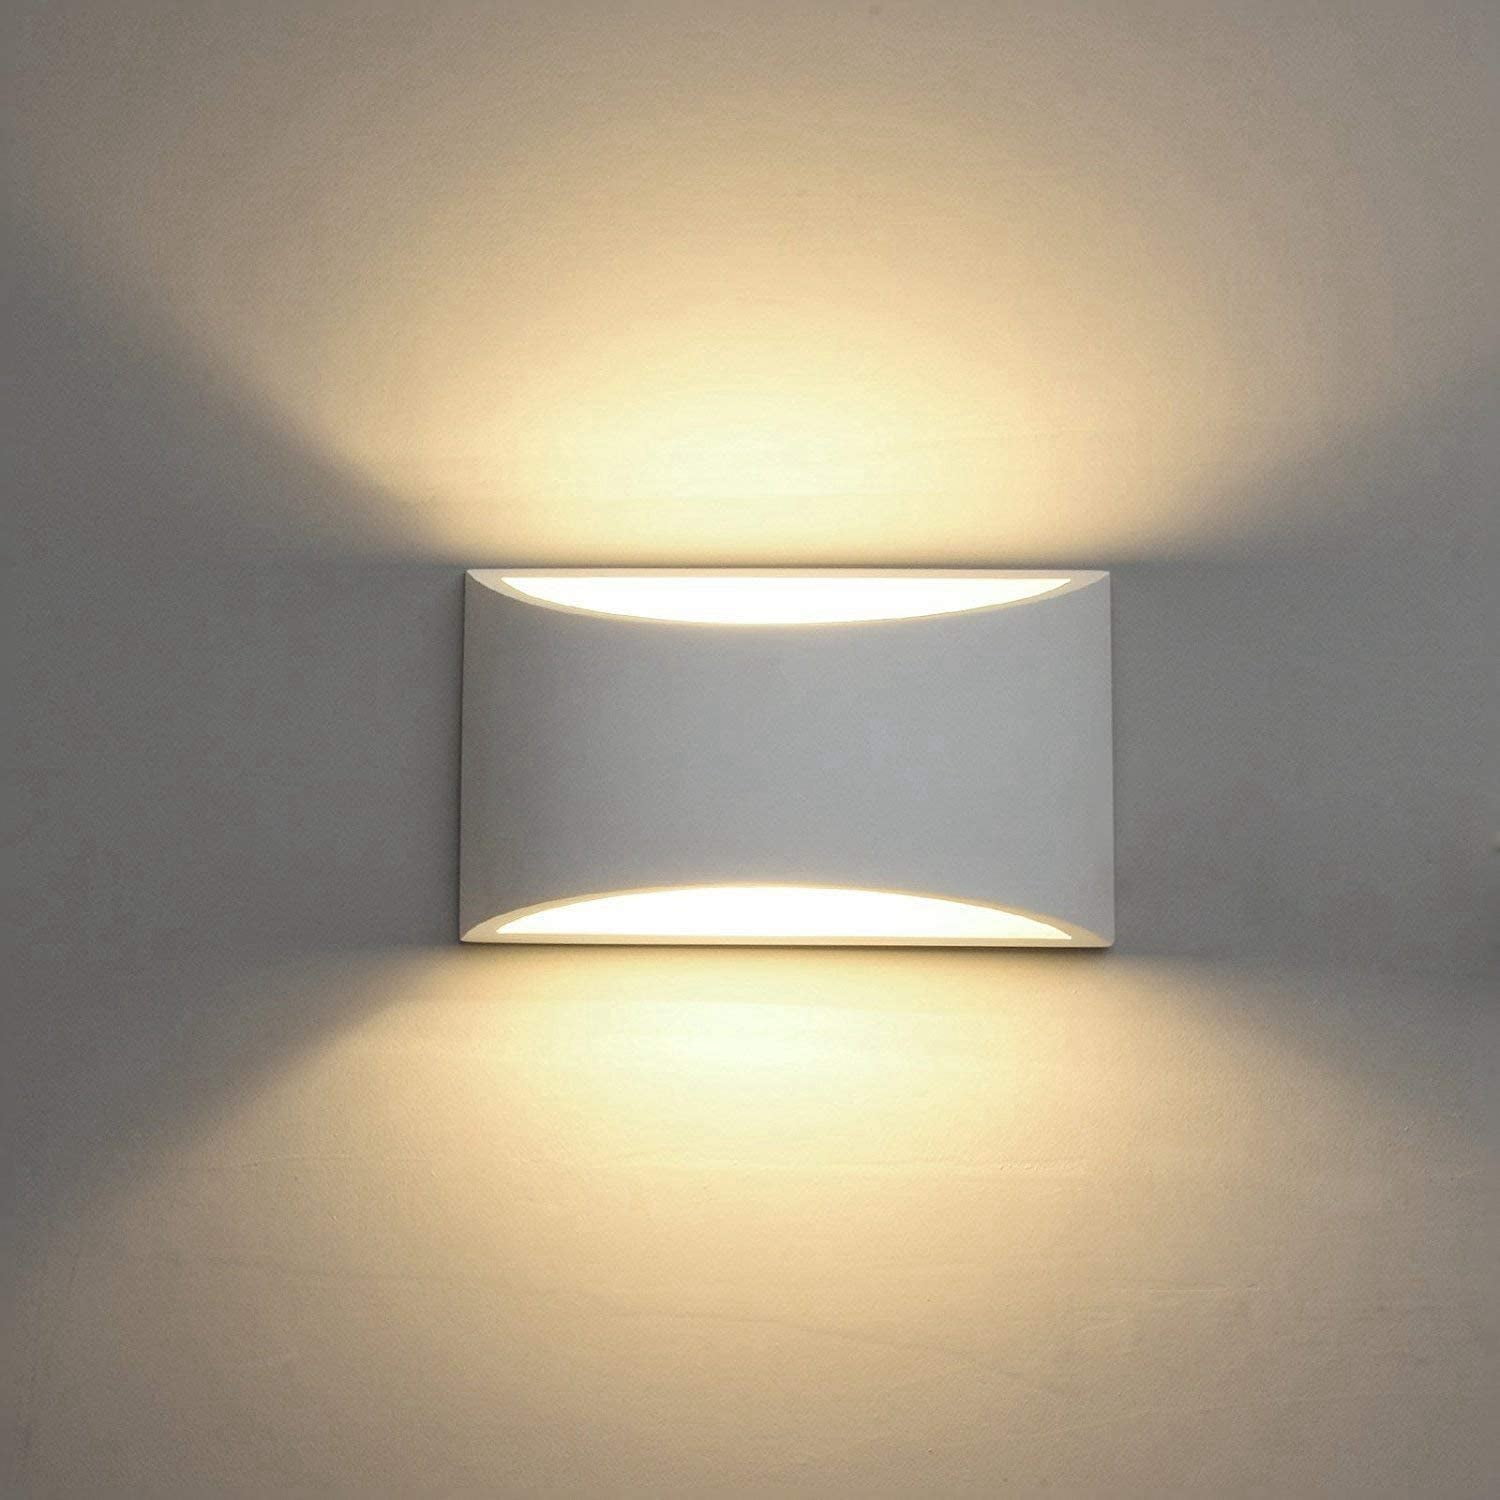 Modern 24W LED Wall Light Aisle Bedroom Sconce Lamp Fixtures Vanity Lights CCT 